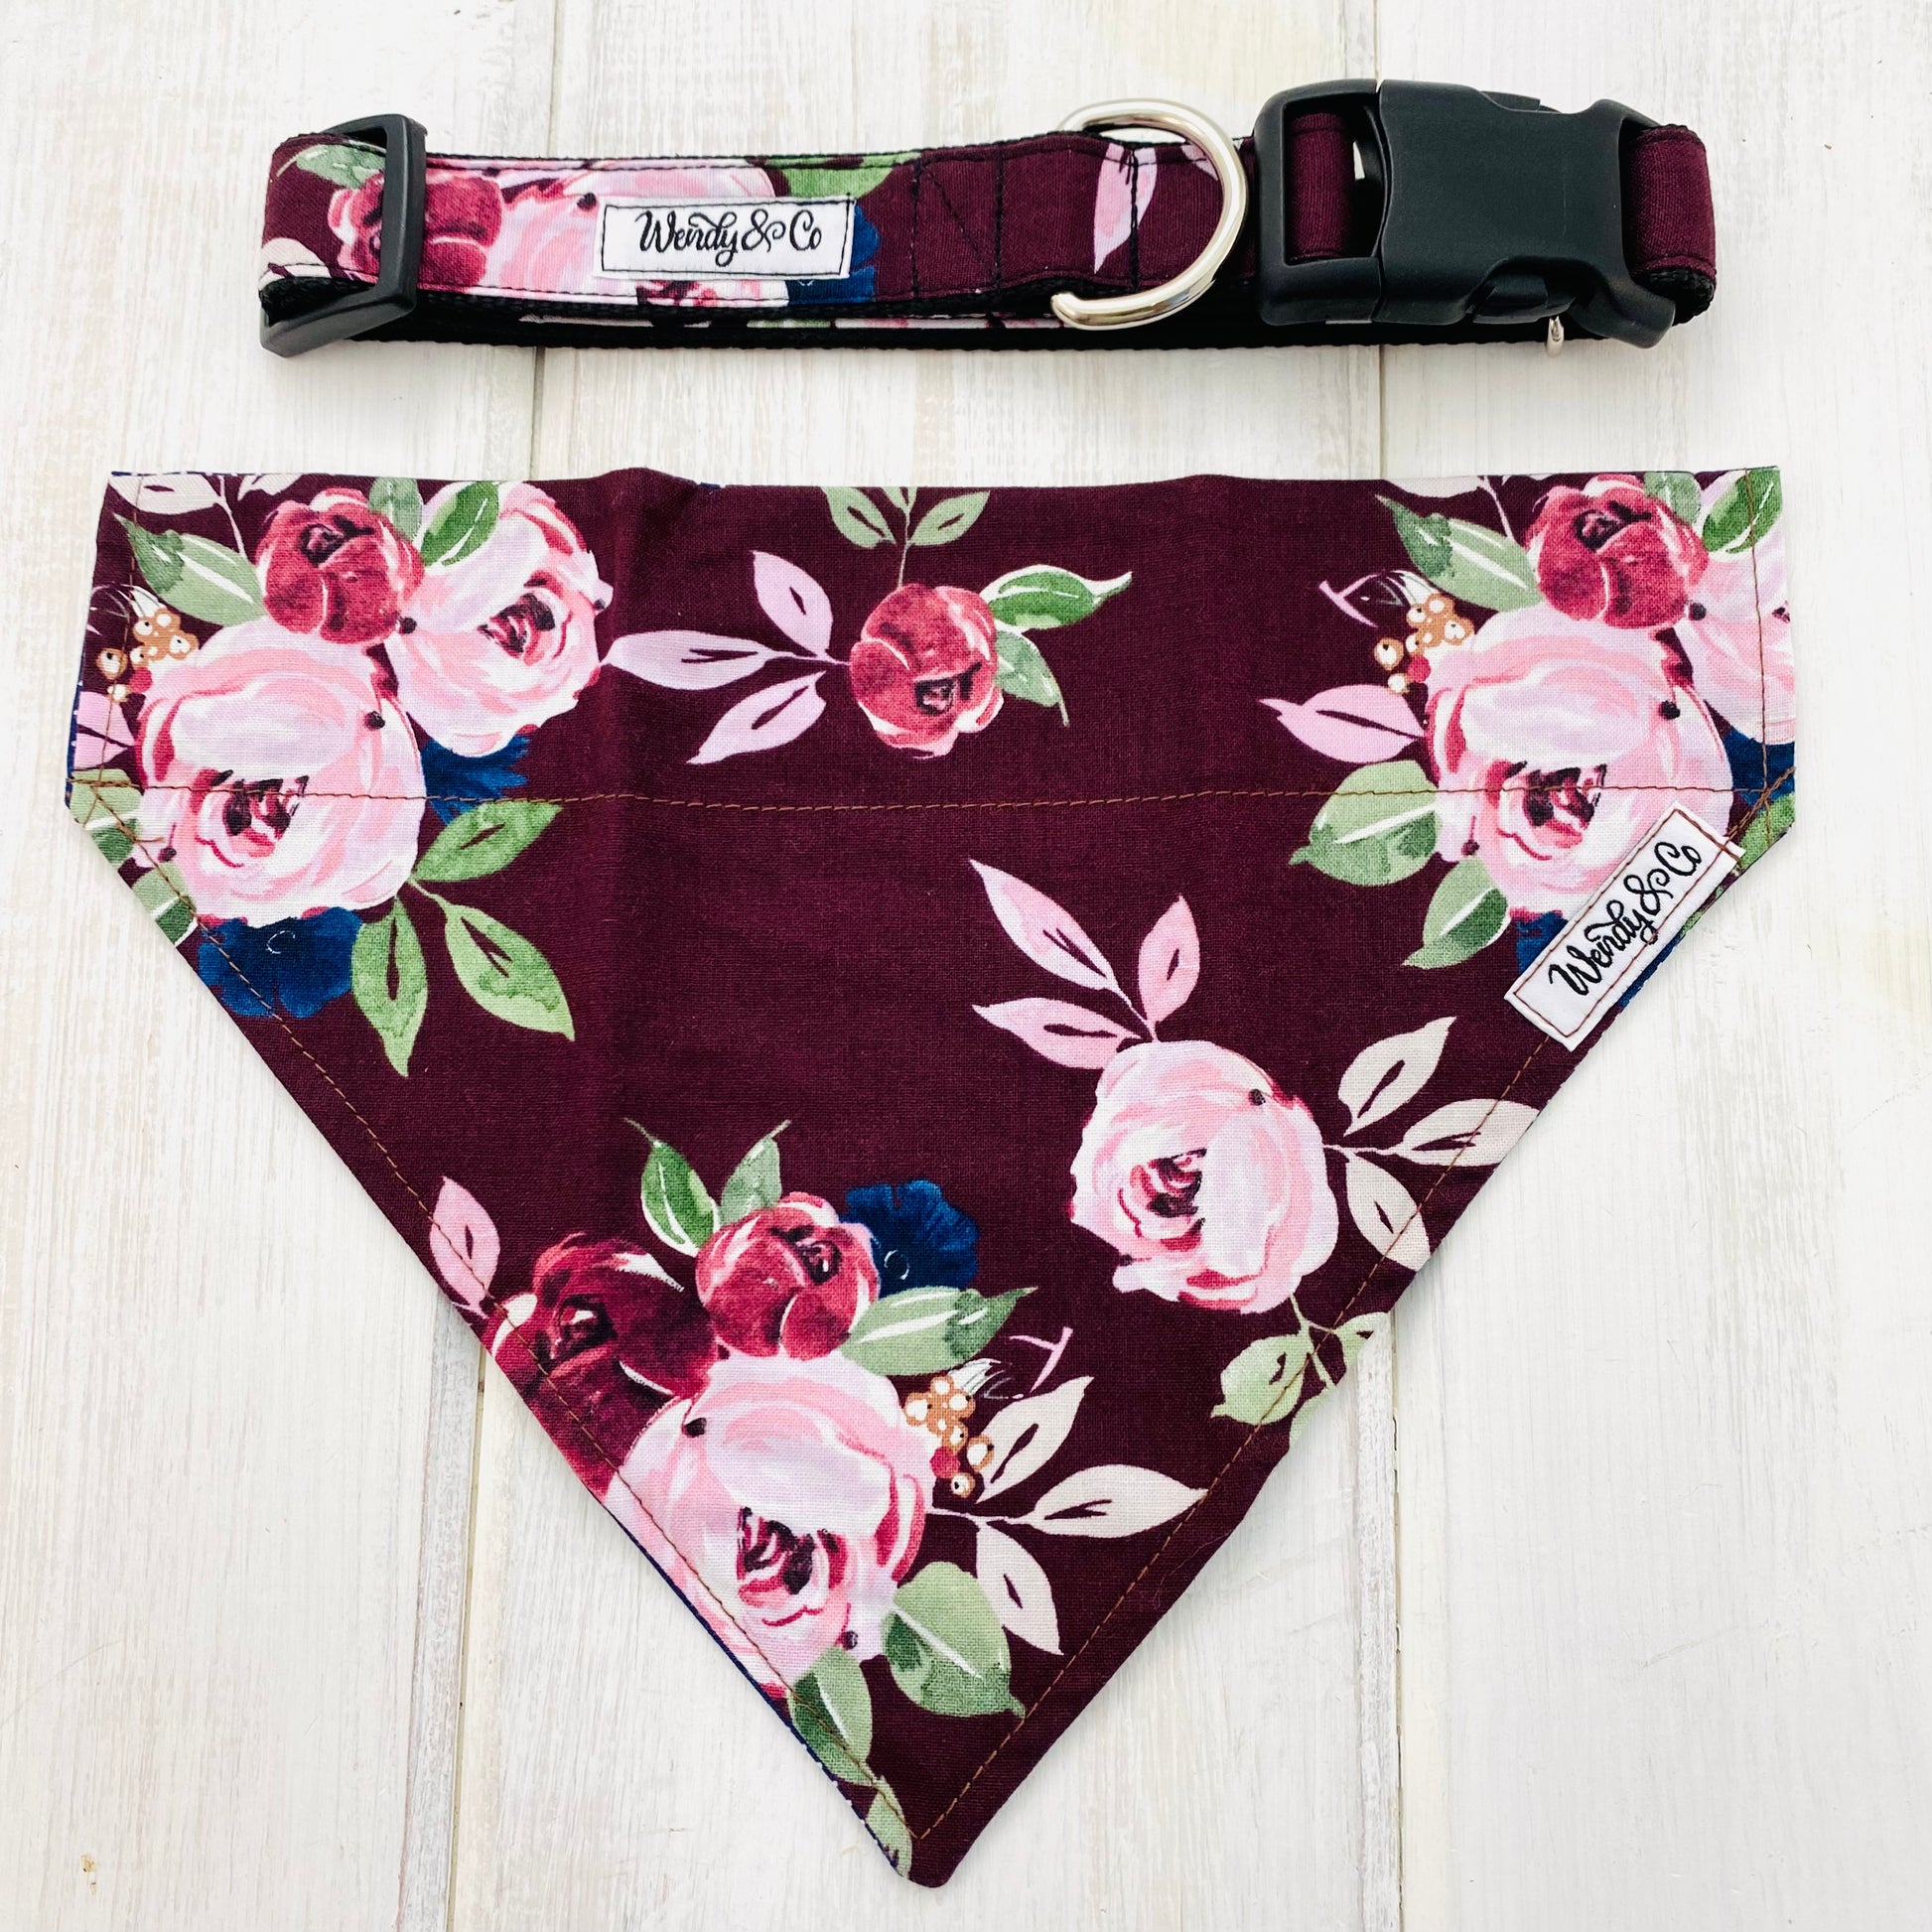 Burgundy floral dog collar and reversible dog bandana.